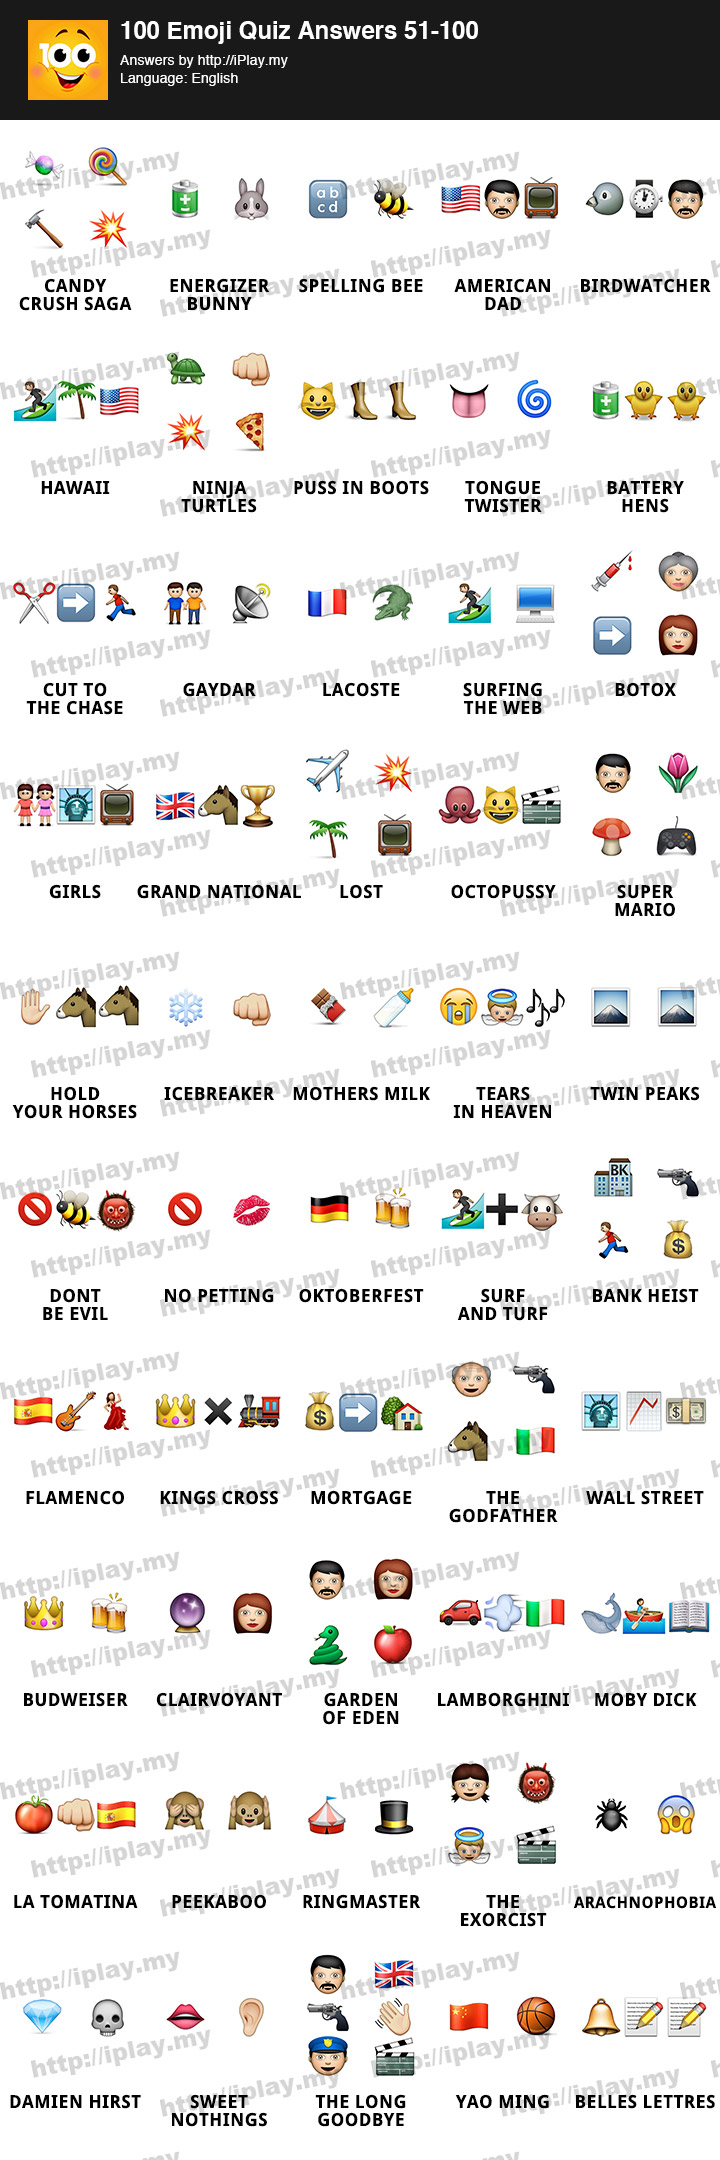 100 Emoji Quiz Answers with reveal pics iPlay.my